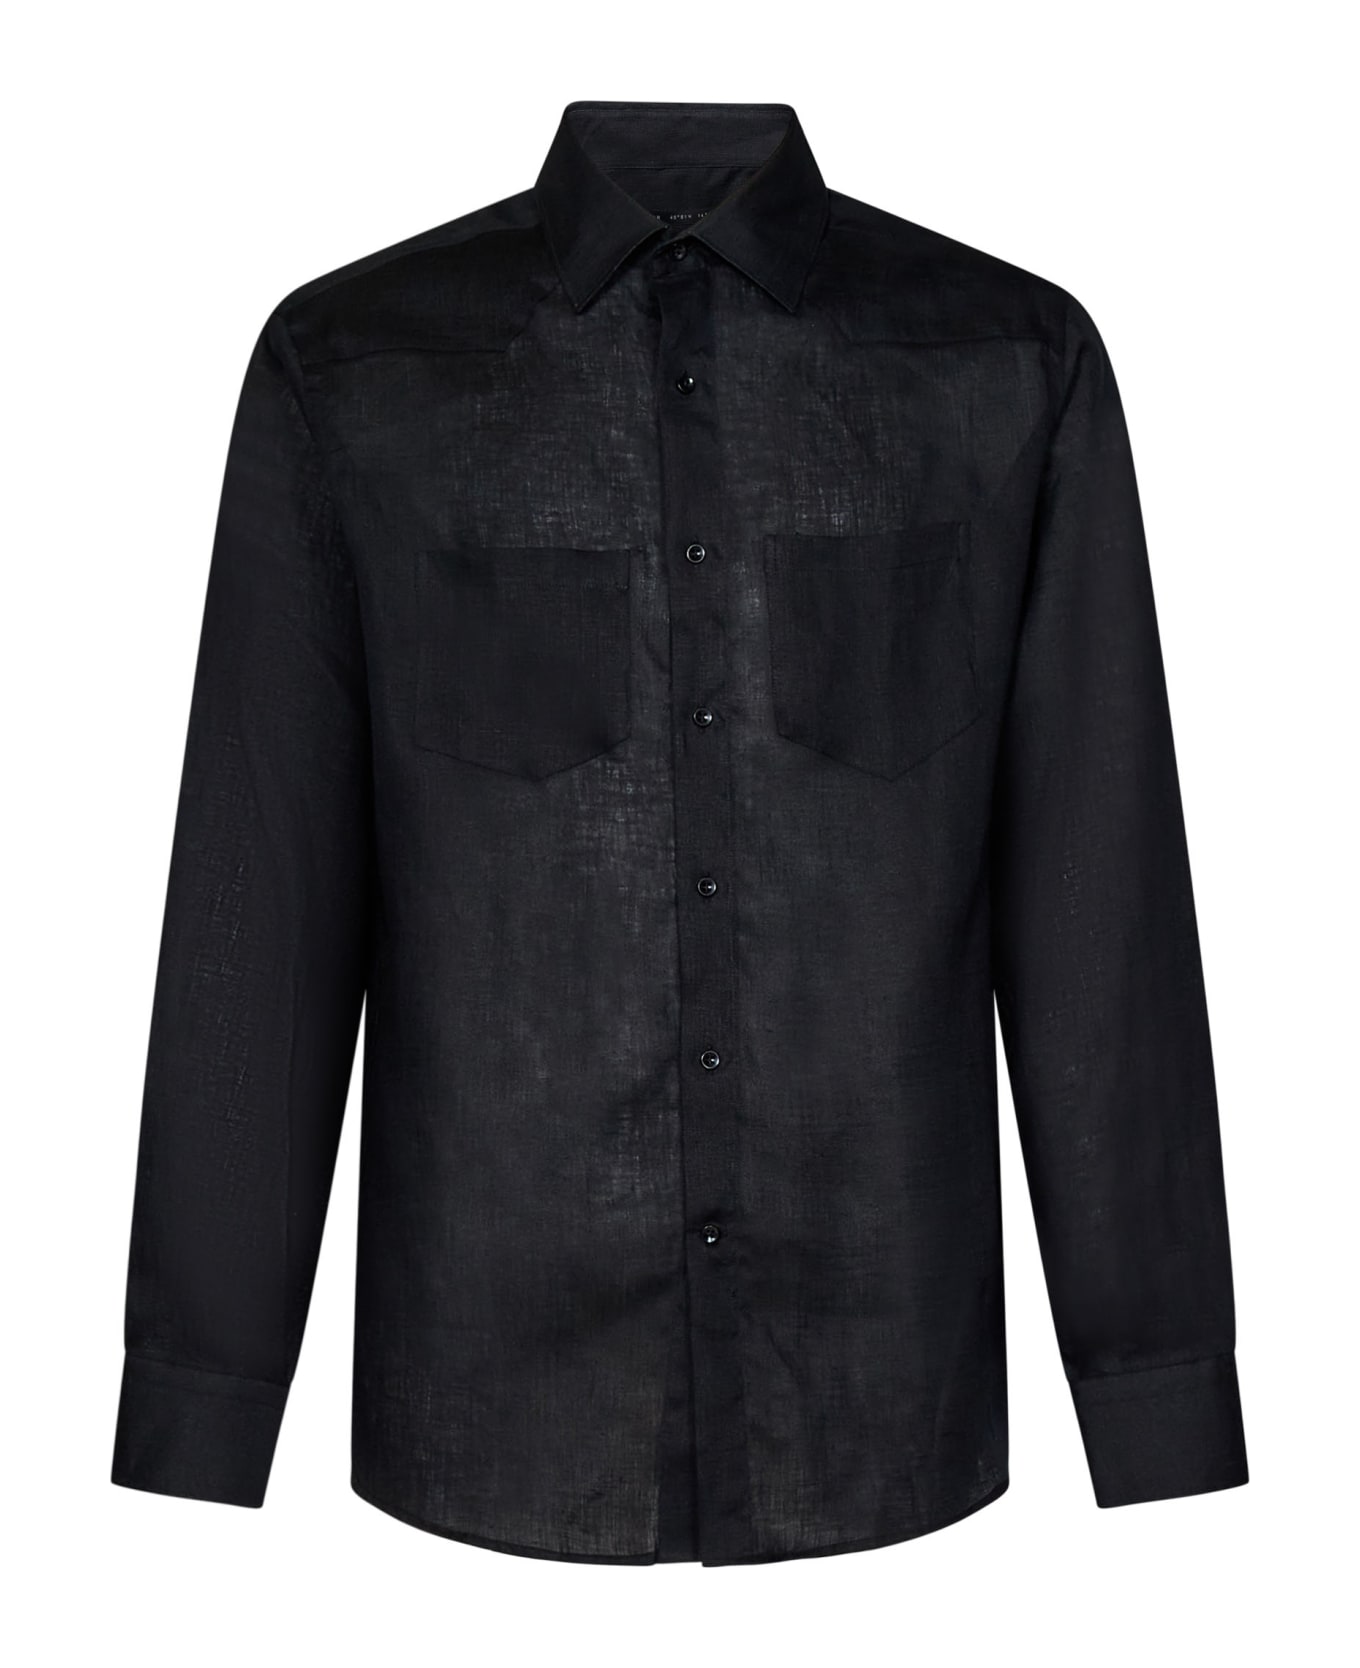 Low Brand Shirt - Black シャツ